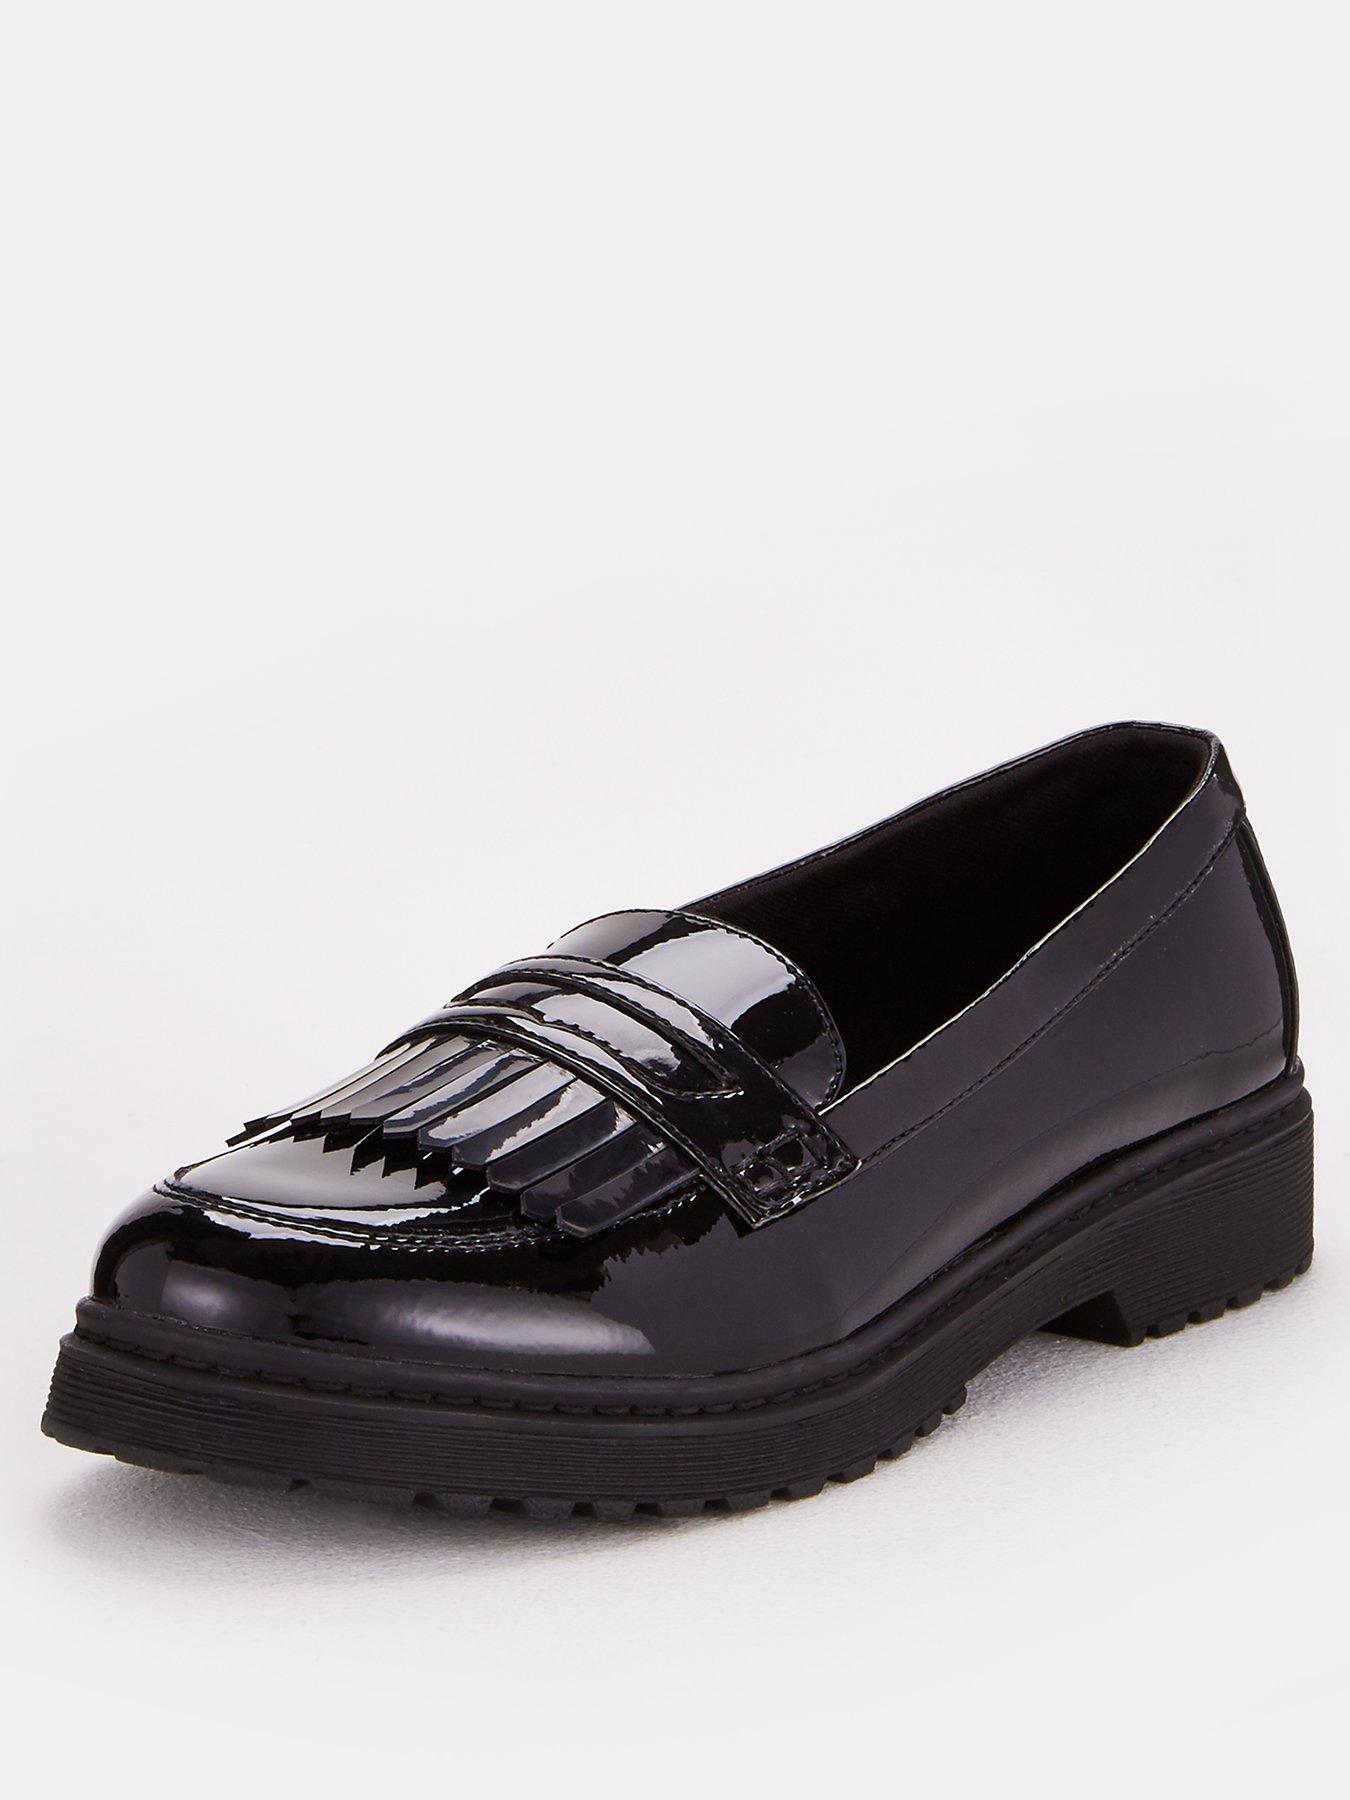 Older Girls Black FULL Leather  F /& F Tassle Loafer School Work Shoes 1-6 Jnr